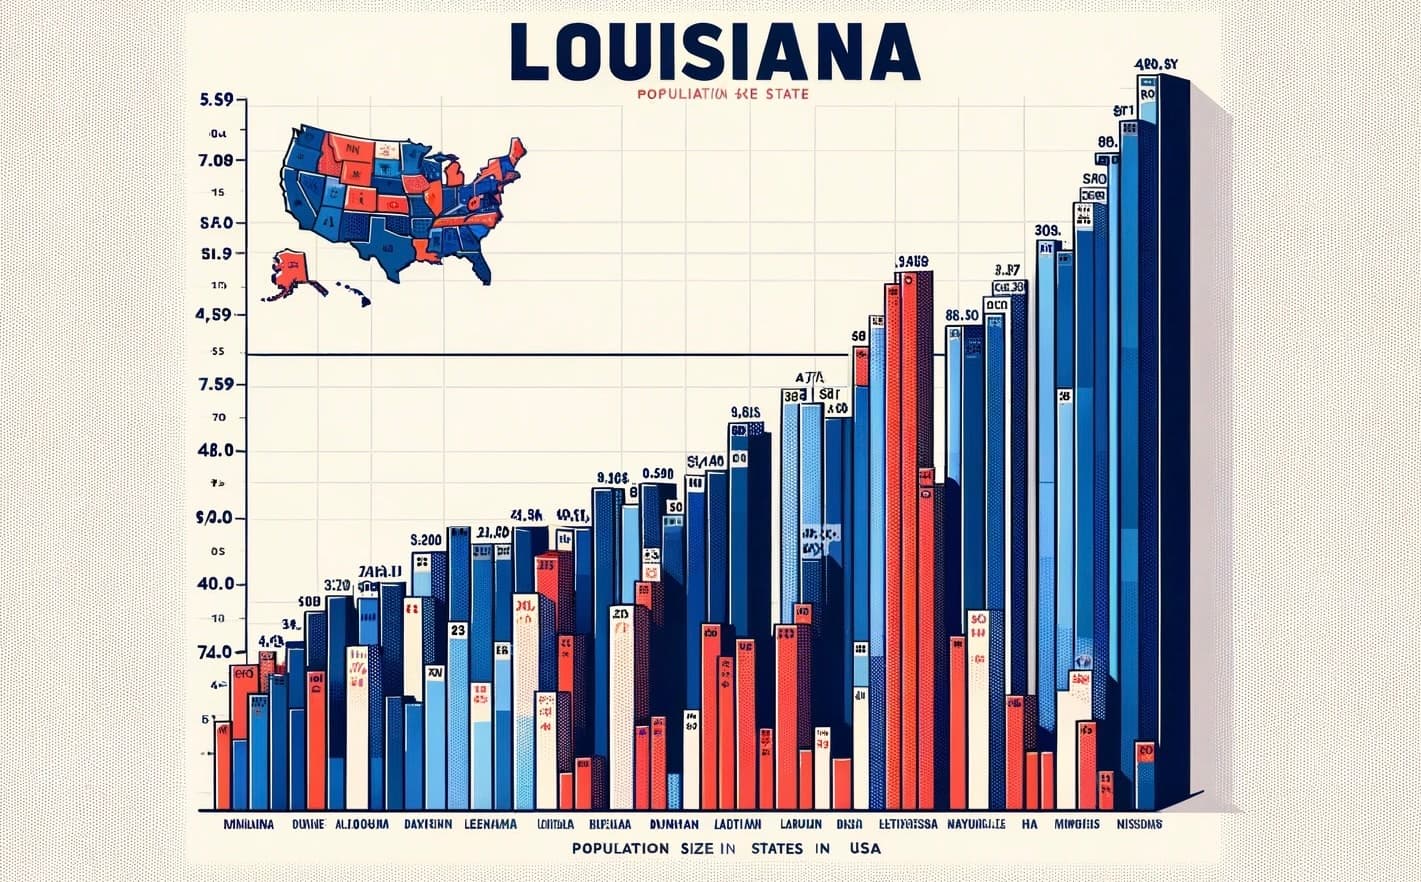 Louisiana state map next to graph